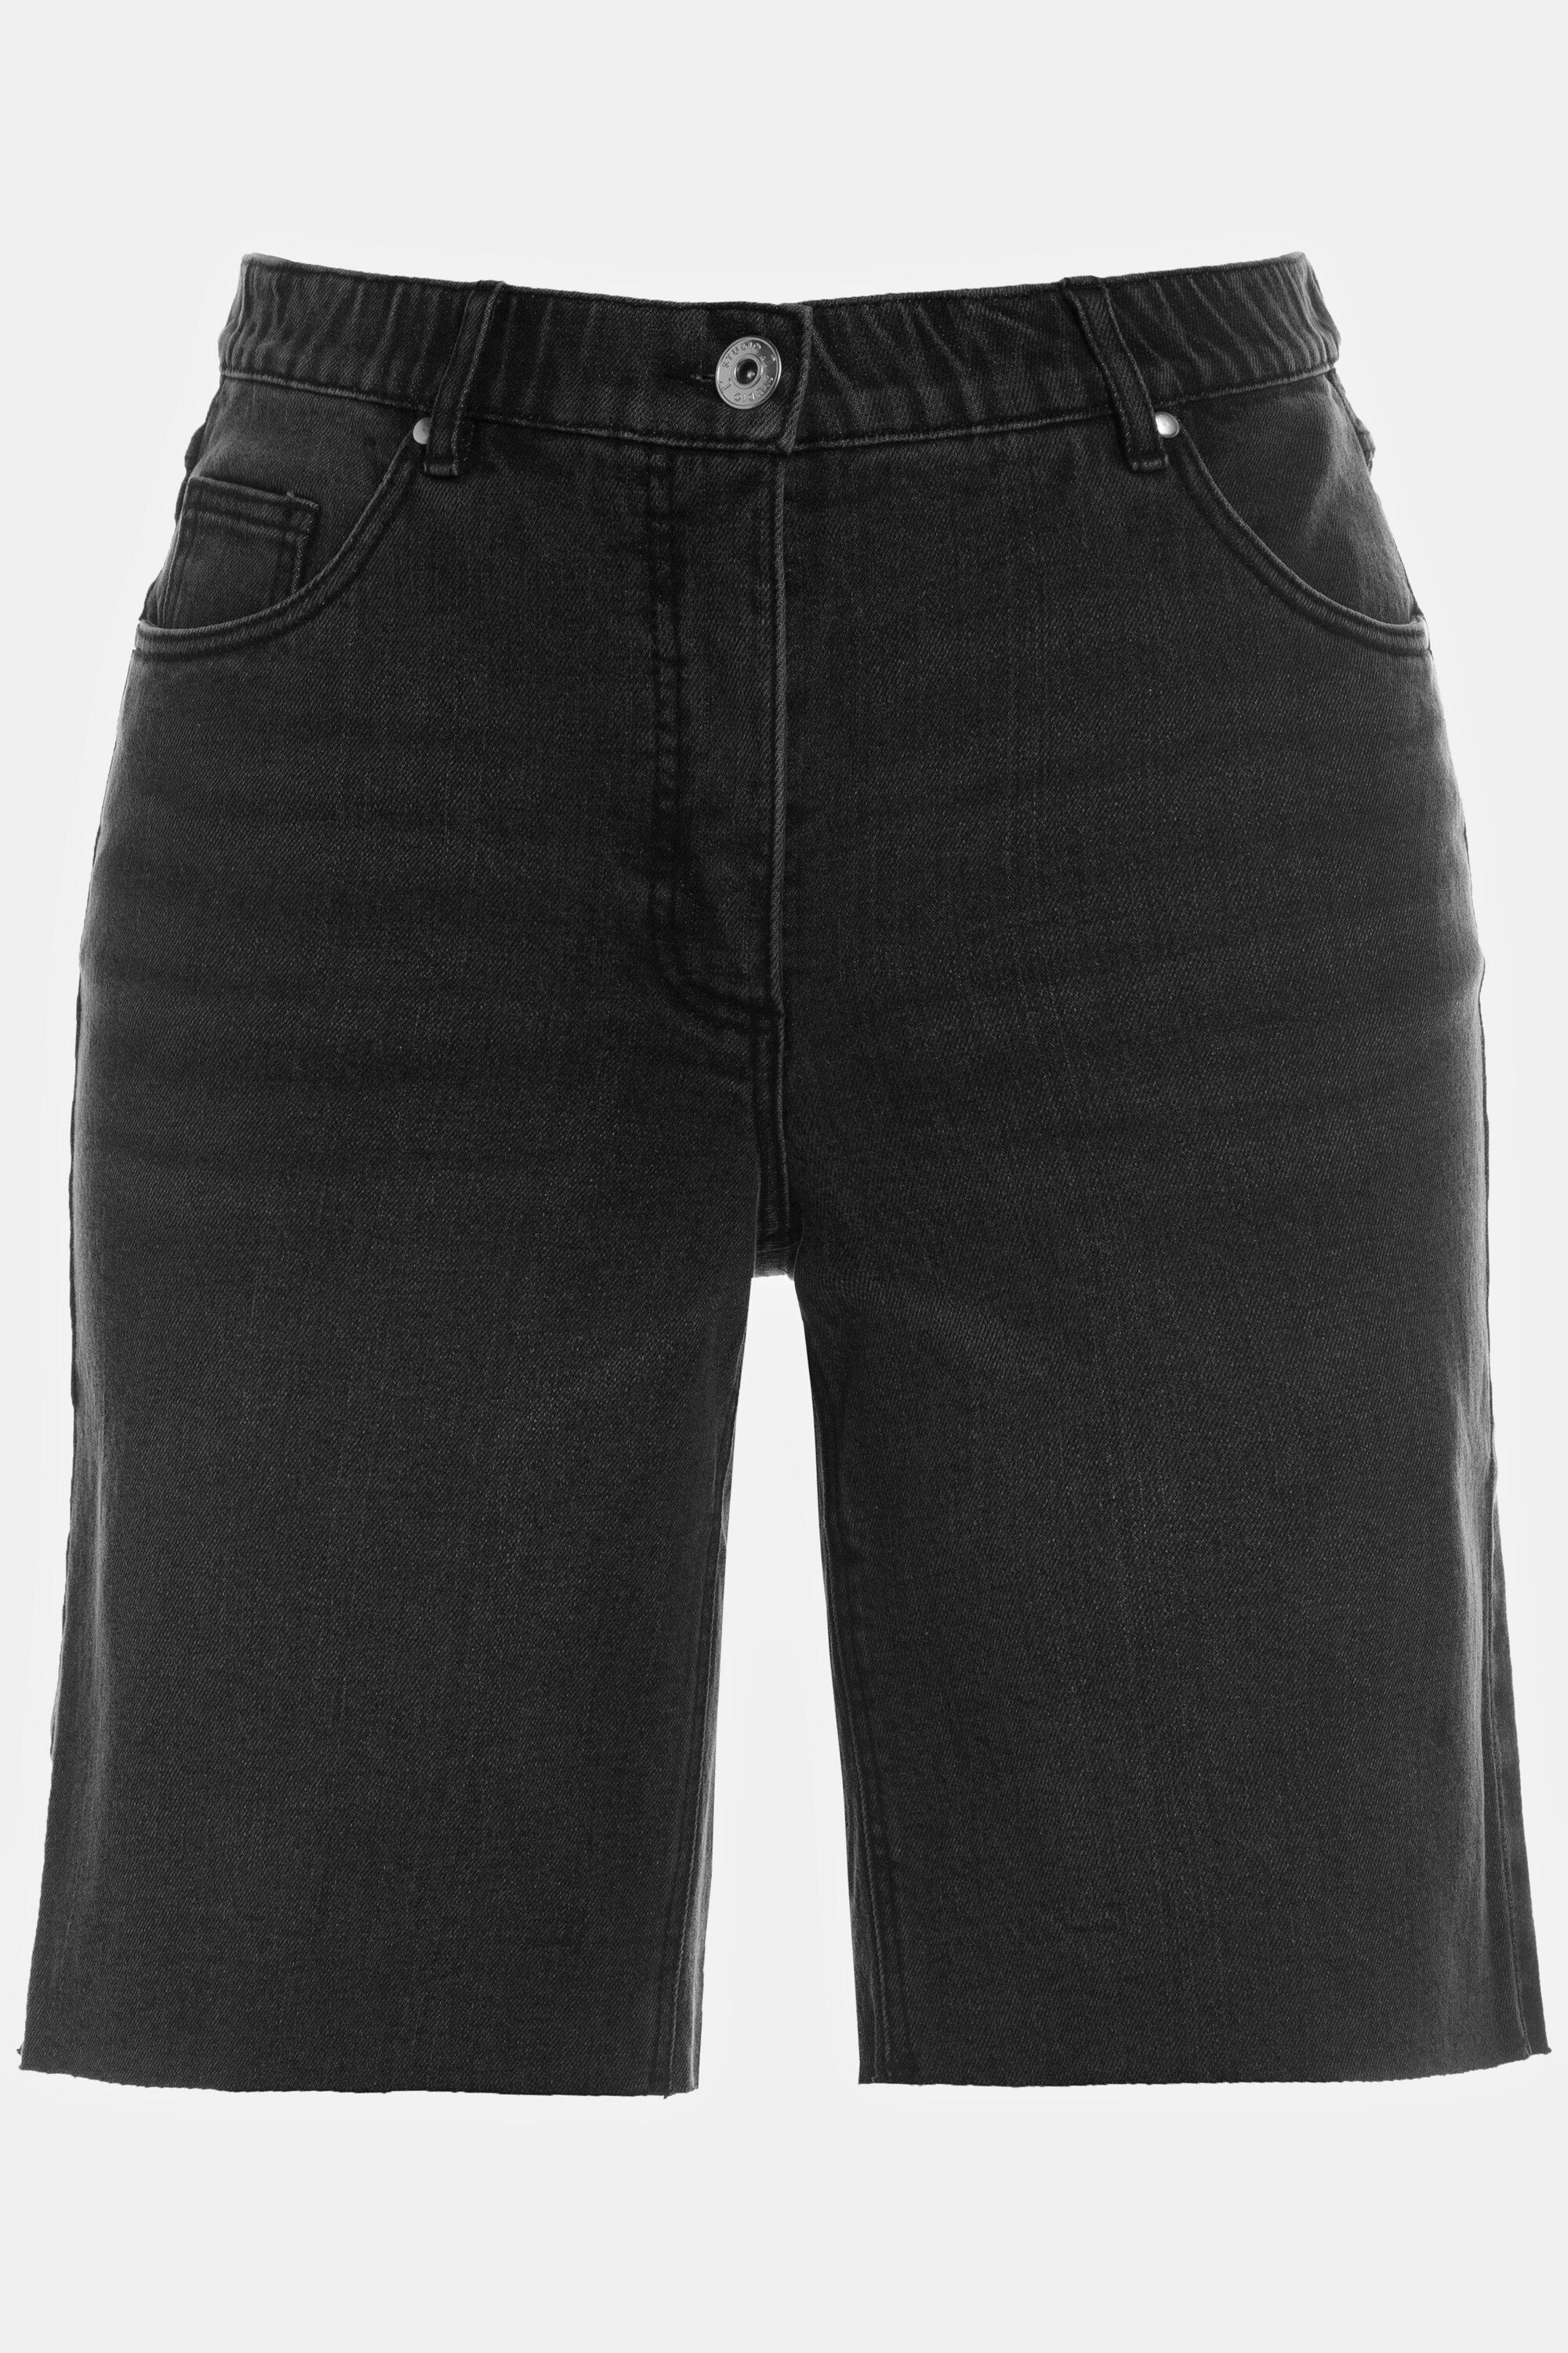 Jeansshorts Waist High Untold black Studio 5-Pocket Jeans-Shorts